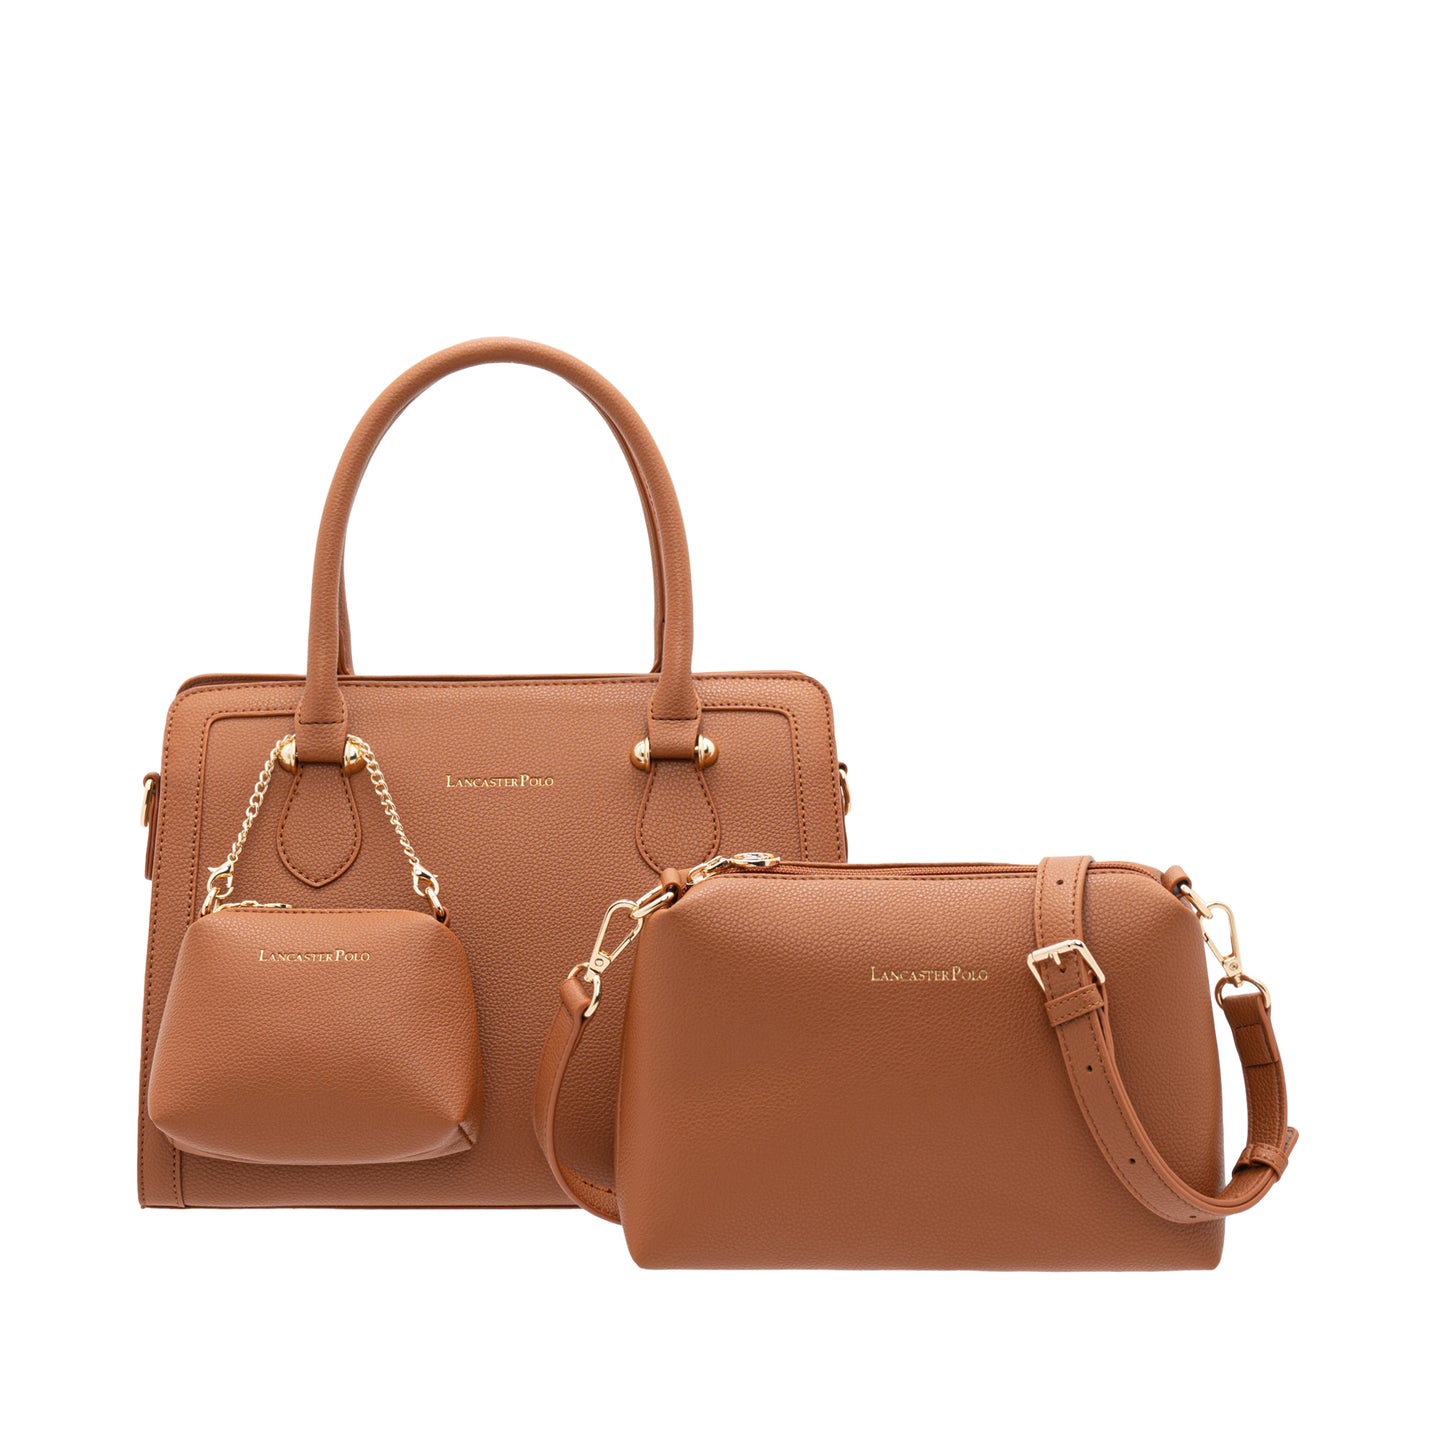 Priscilla 3 in 1 Handbag Sets